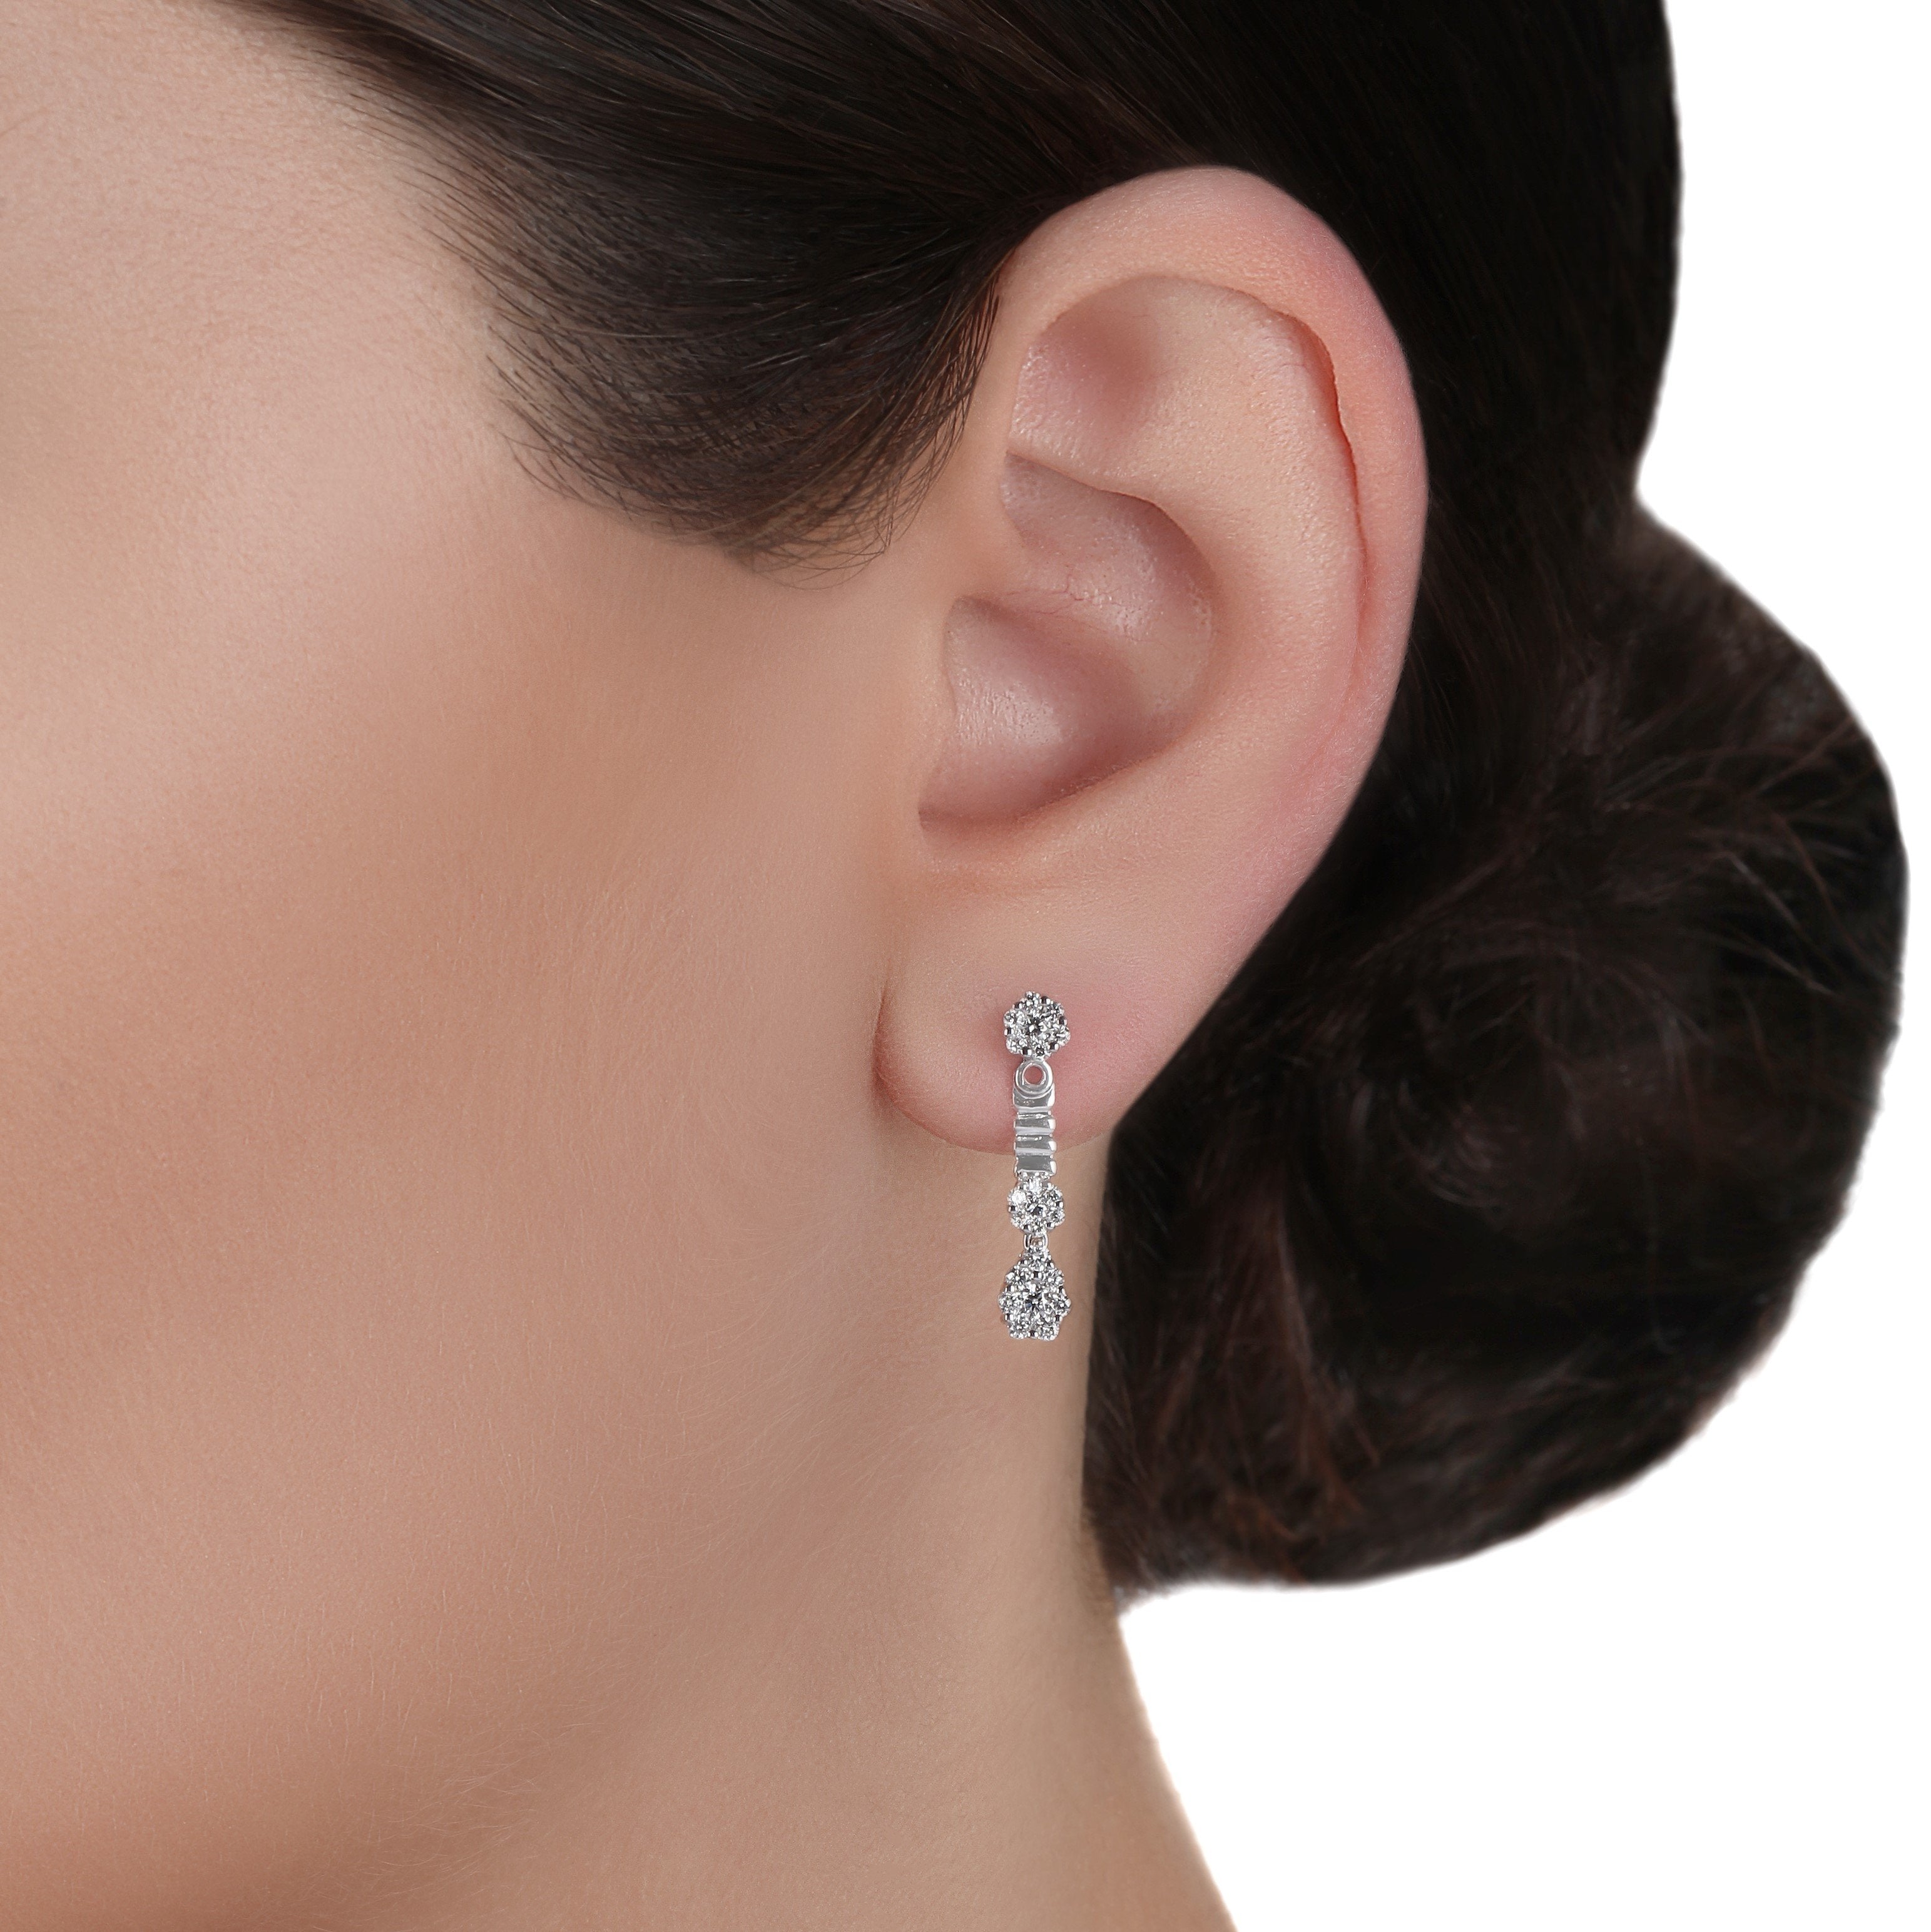 Buy Stud Diamond Earrings, Diamond Stud Earrings, Round Diamond Earrings  14K Yellow Gold, 0.90 Carats Genuine Diamond Stud Earrings Online in India  - Etsy